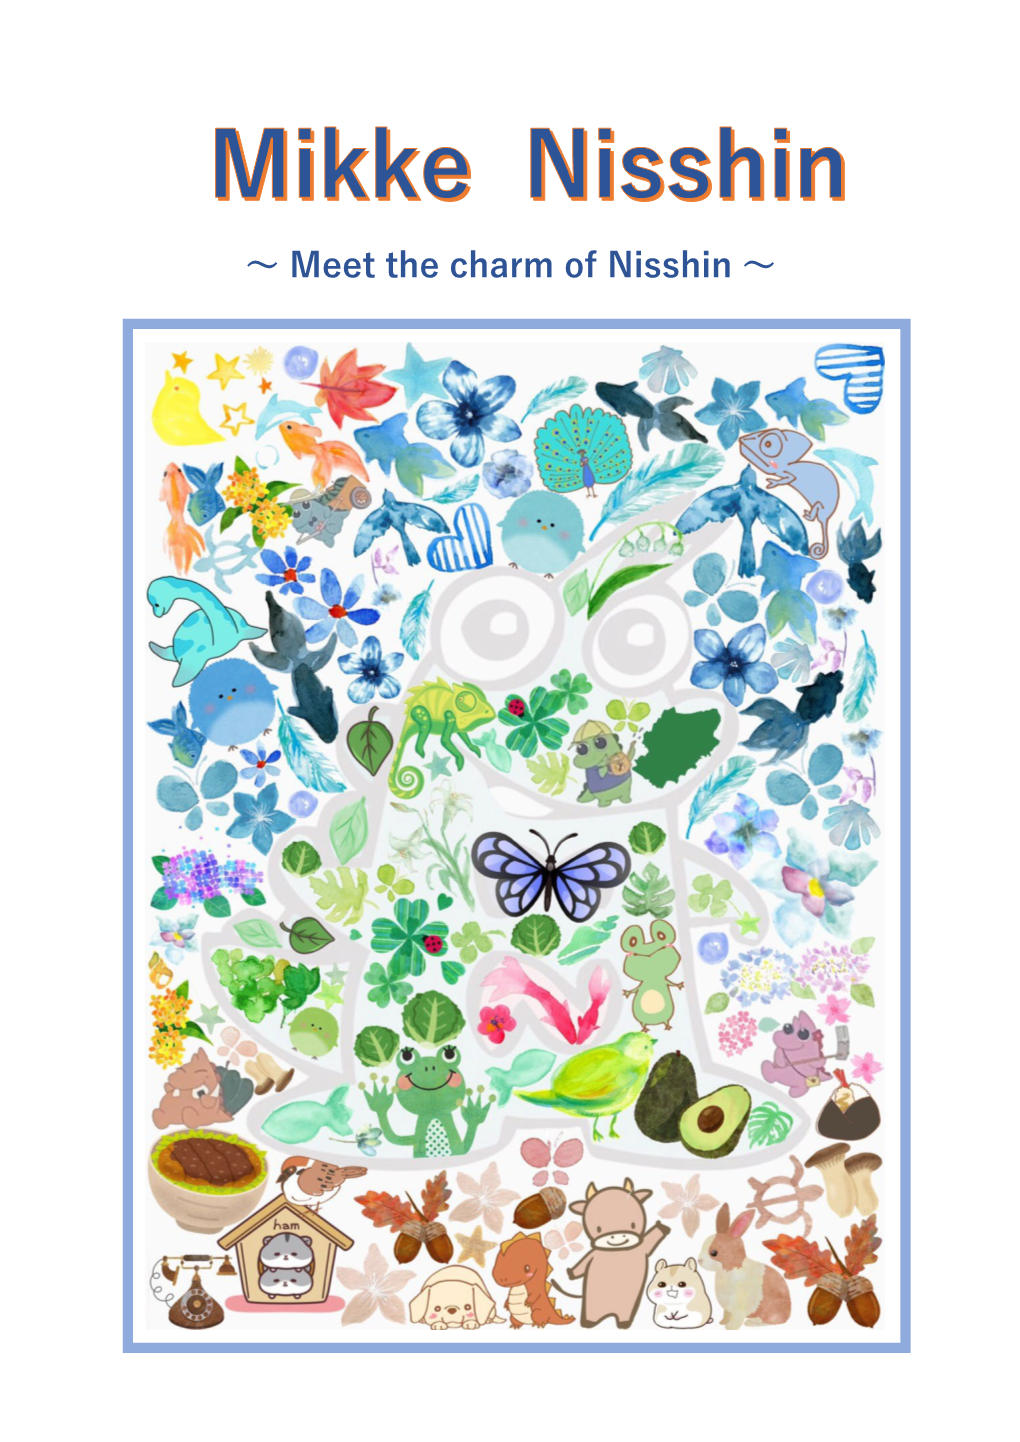 ～ Meet the Charm of Nisshin ～